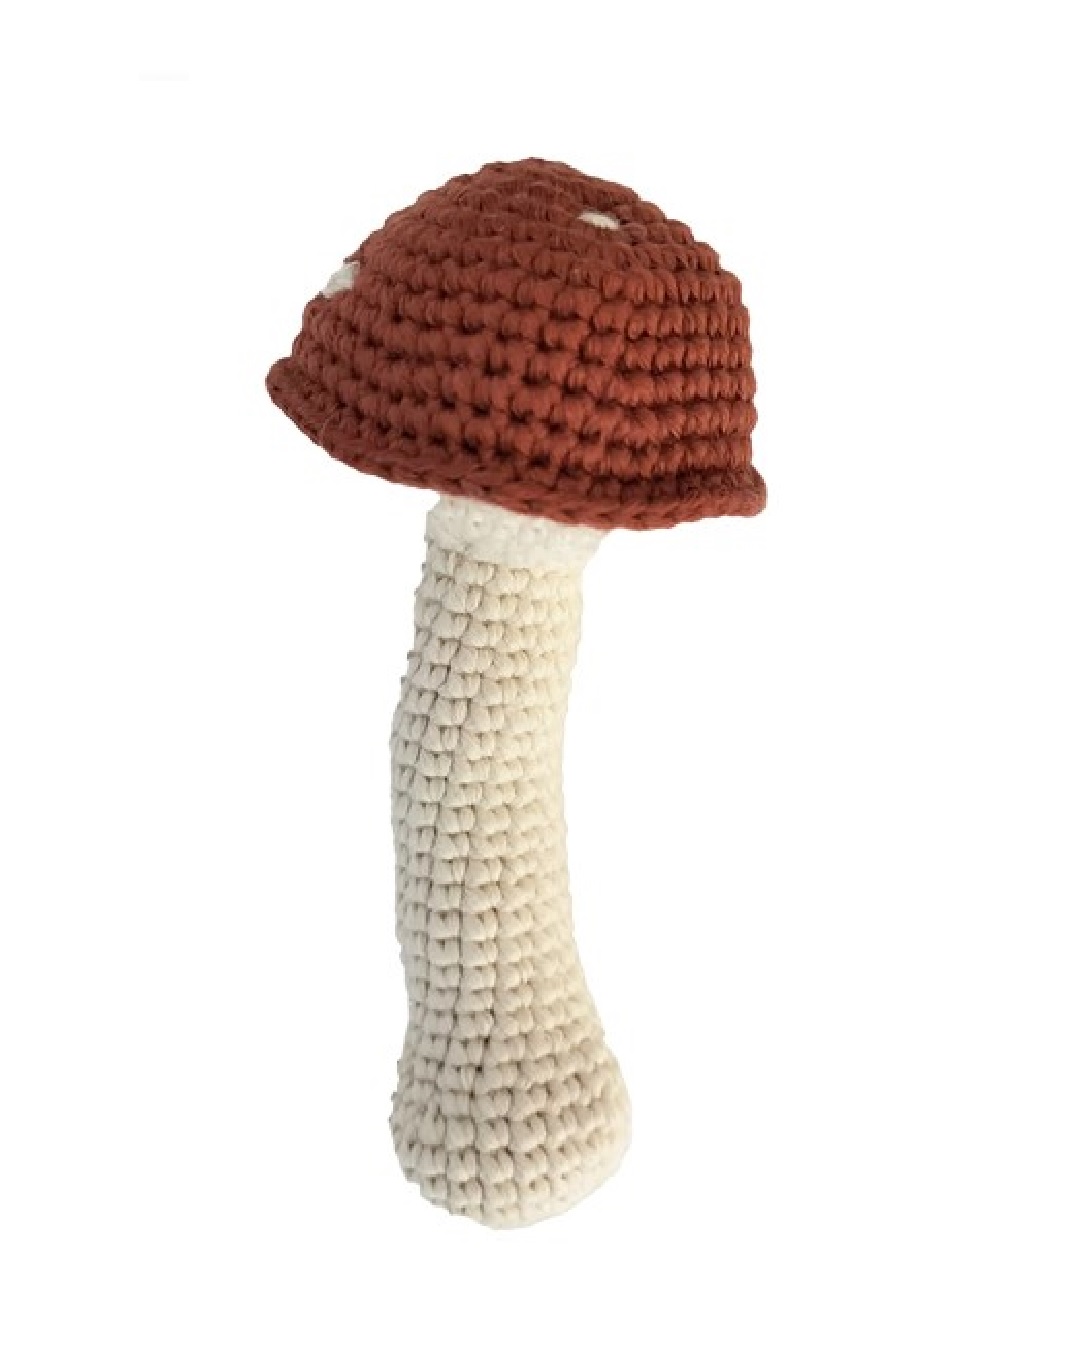 Crocheted mushroom soft toy rattle